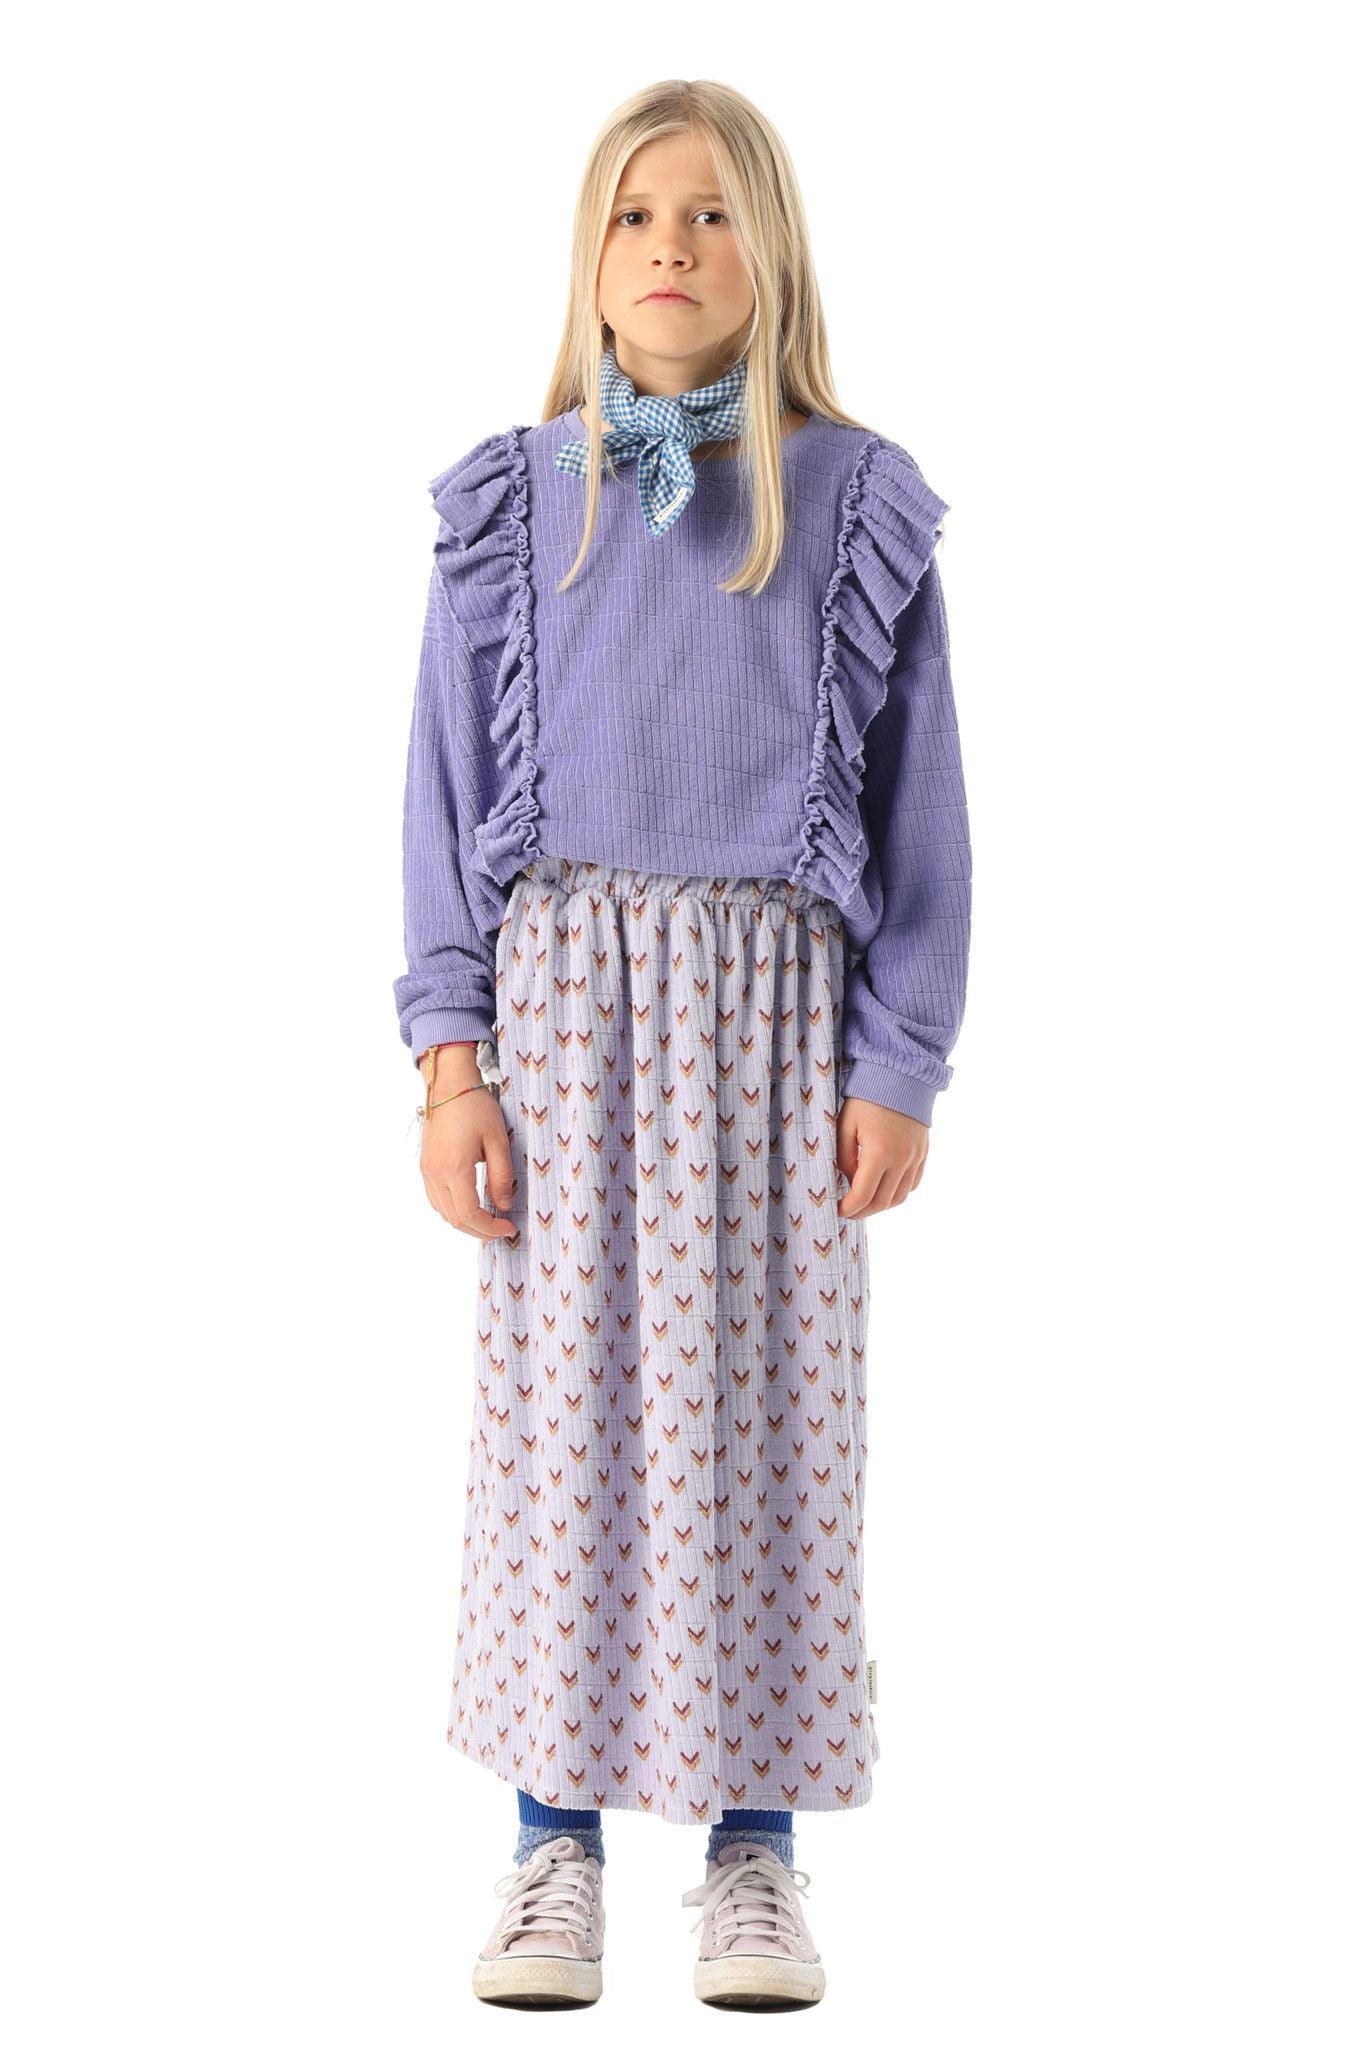 Piupiuchick falda larga de rizo de algodón | lila con flechas multicolores